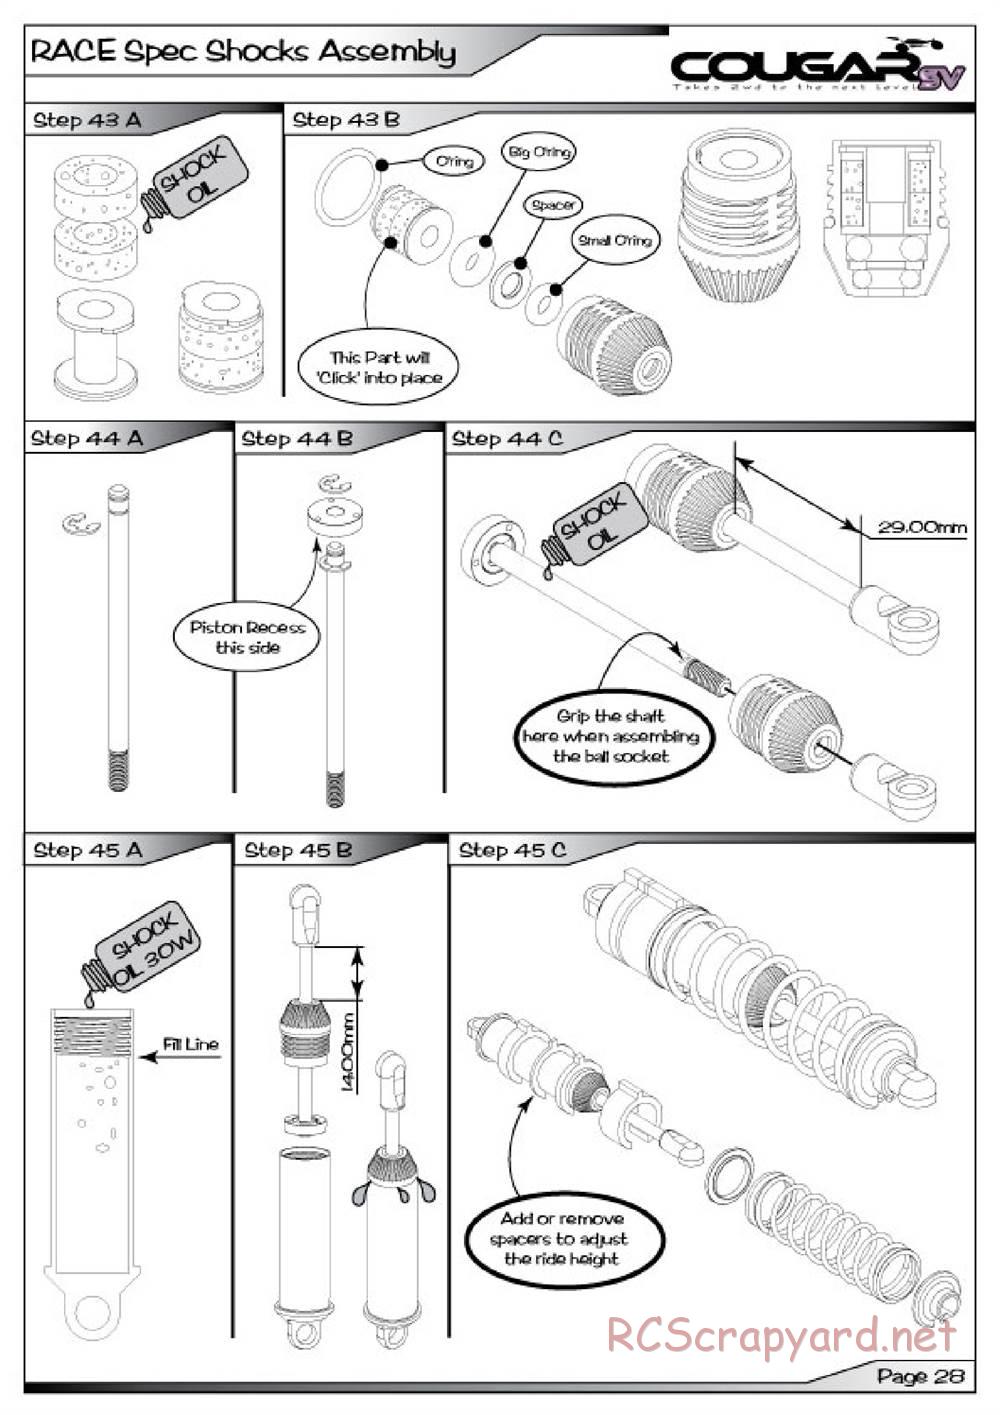 Schumacher - Cougar SV - Manual - Page 29